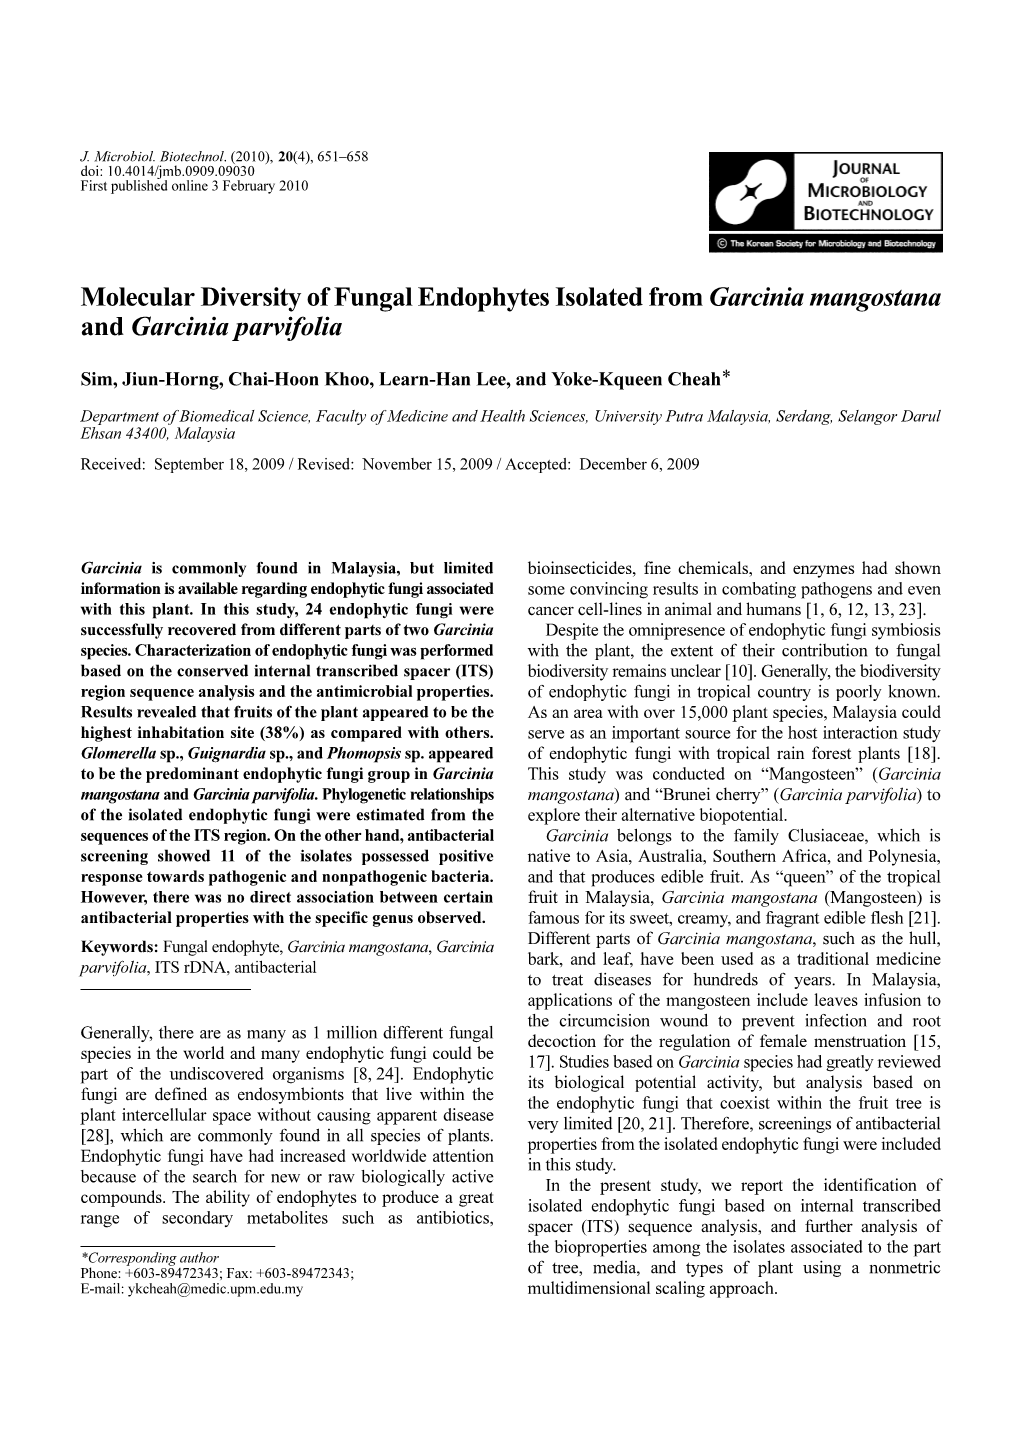 Molecular Diversity of Fungal Endophytes Isolated from Garcinia Mangostana and Garcinia Parvifolia